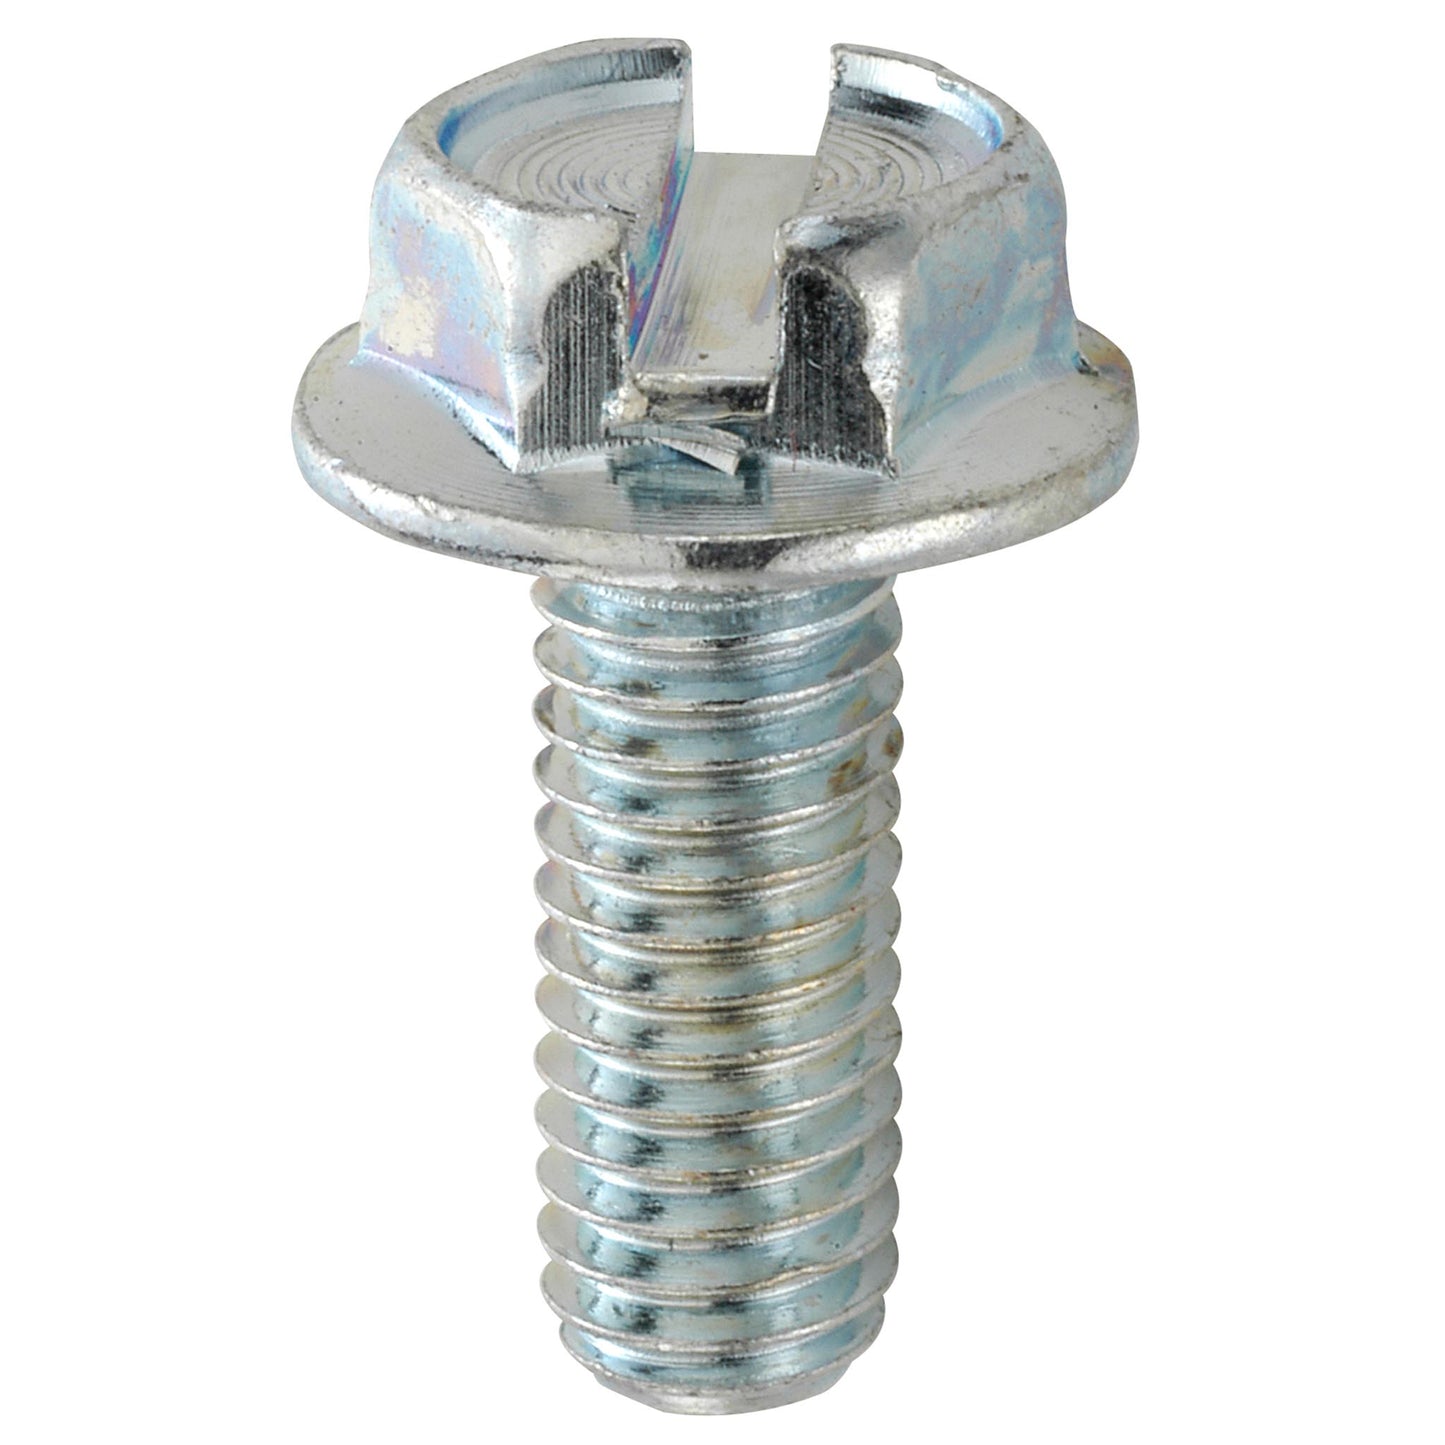 Mudguard screws M 6 x 16 galvanized steel